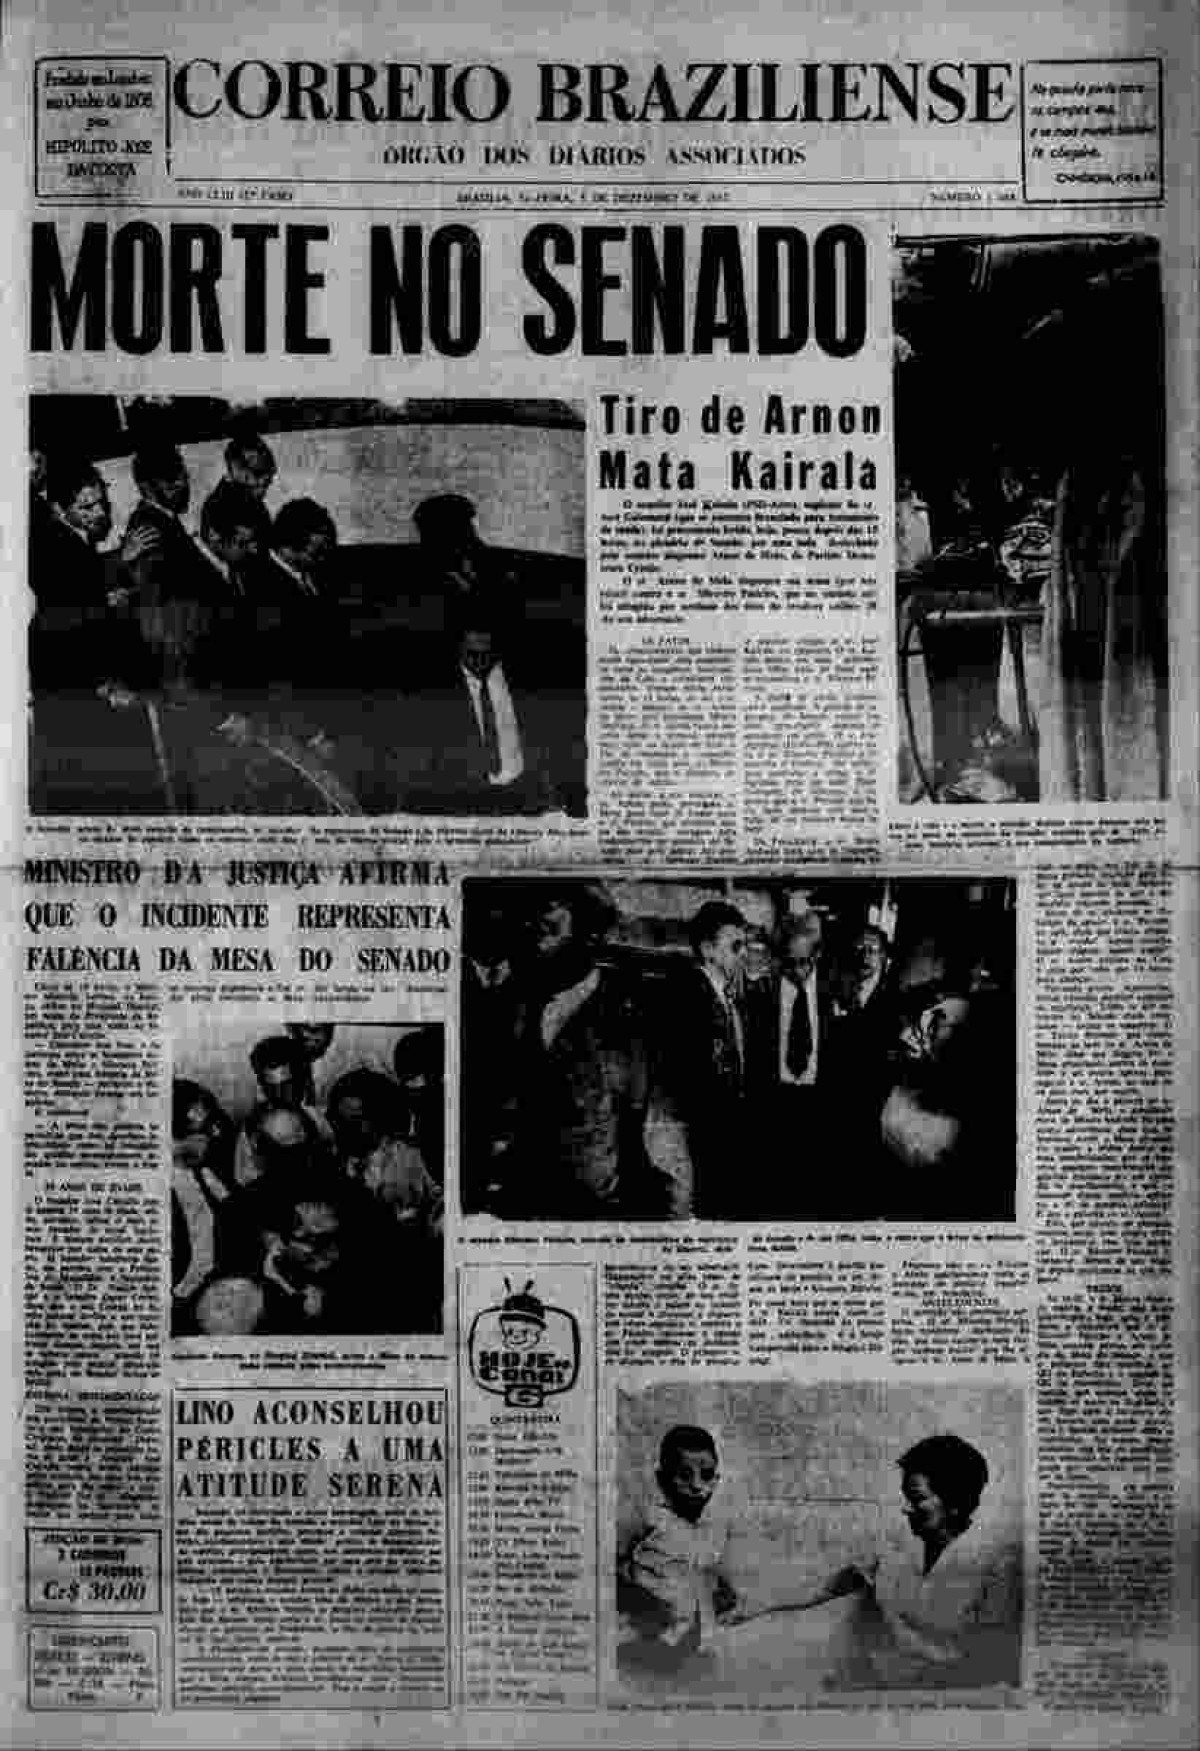 Cobertura do CB da morte do senador José Kairala, assassinado pelo senador Arnon de Mello no plenário do Senado 4/12/1963 